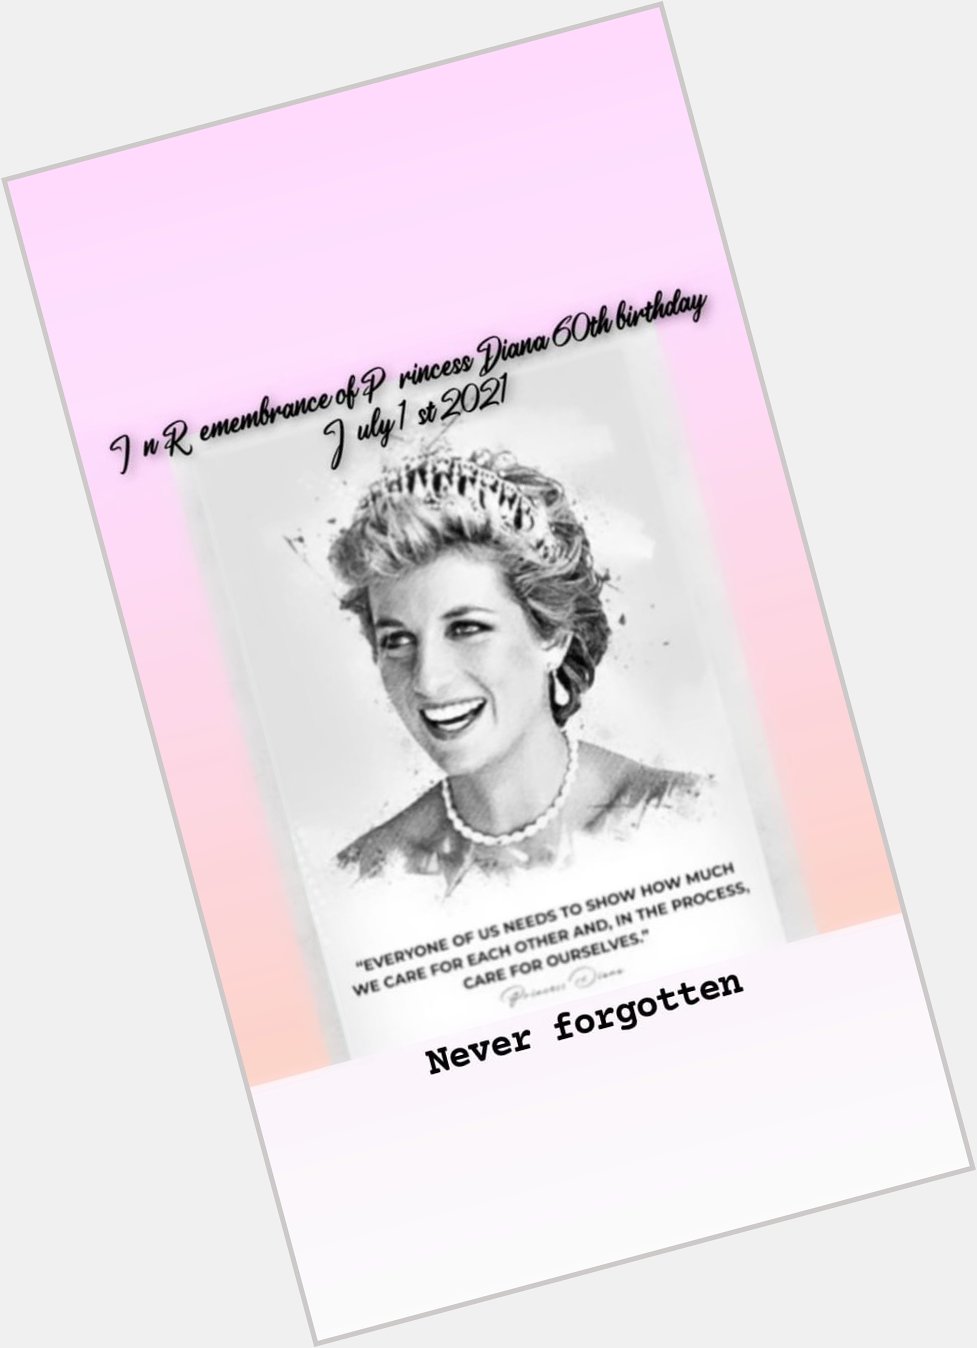 In Loving Memory of Princess Diana 
Happy Heavenly 60th Birthday Princess Diana (tomorrow) 